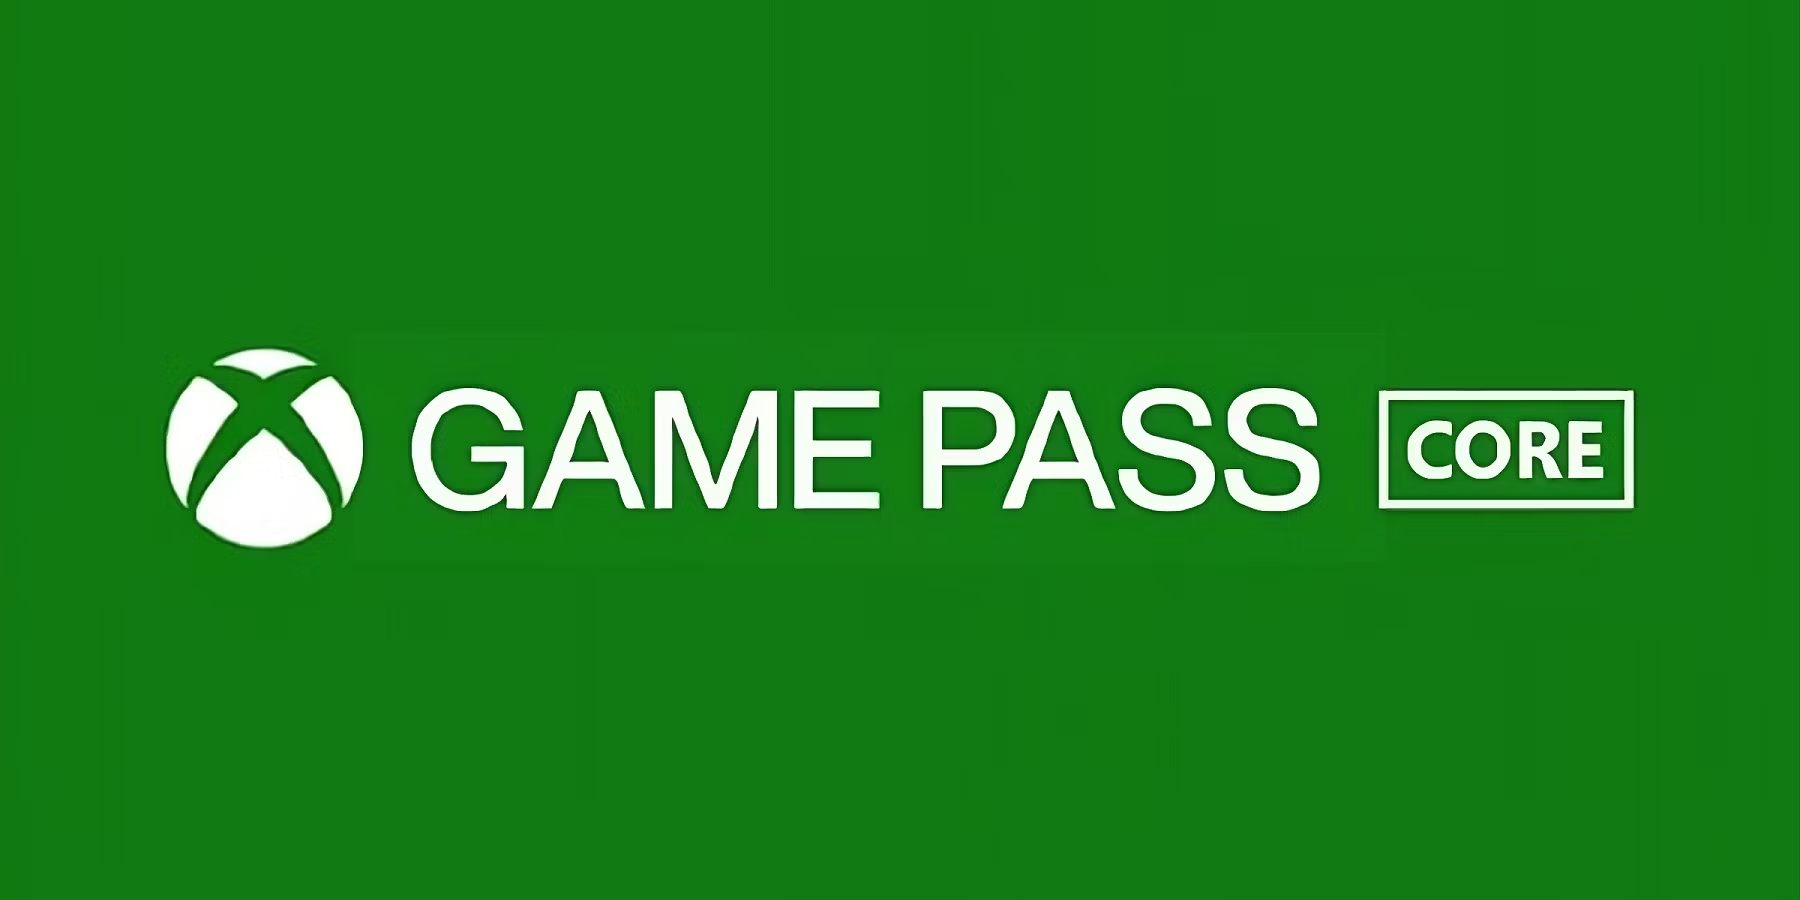 microsoft reveals full list of xbox game pass core games  Image of microsoft reveals full list of xbox game pass core games